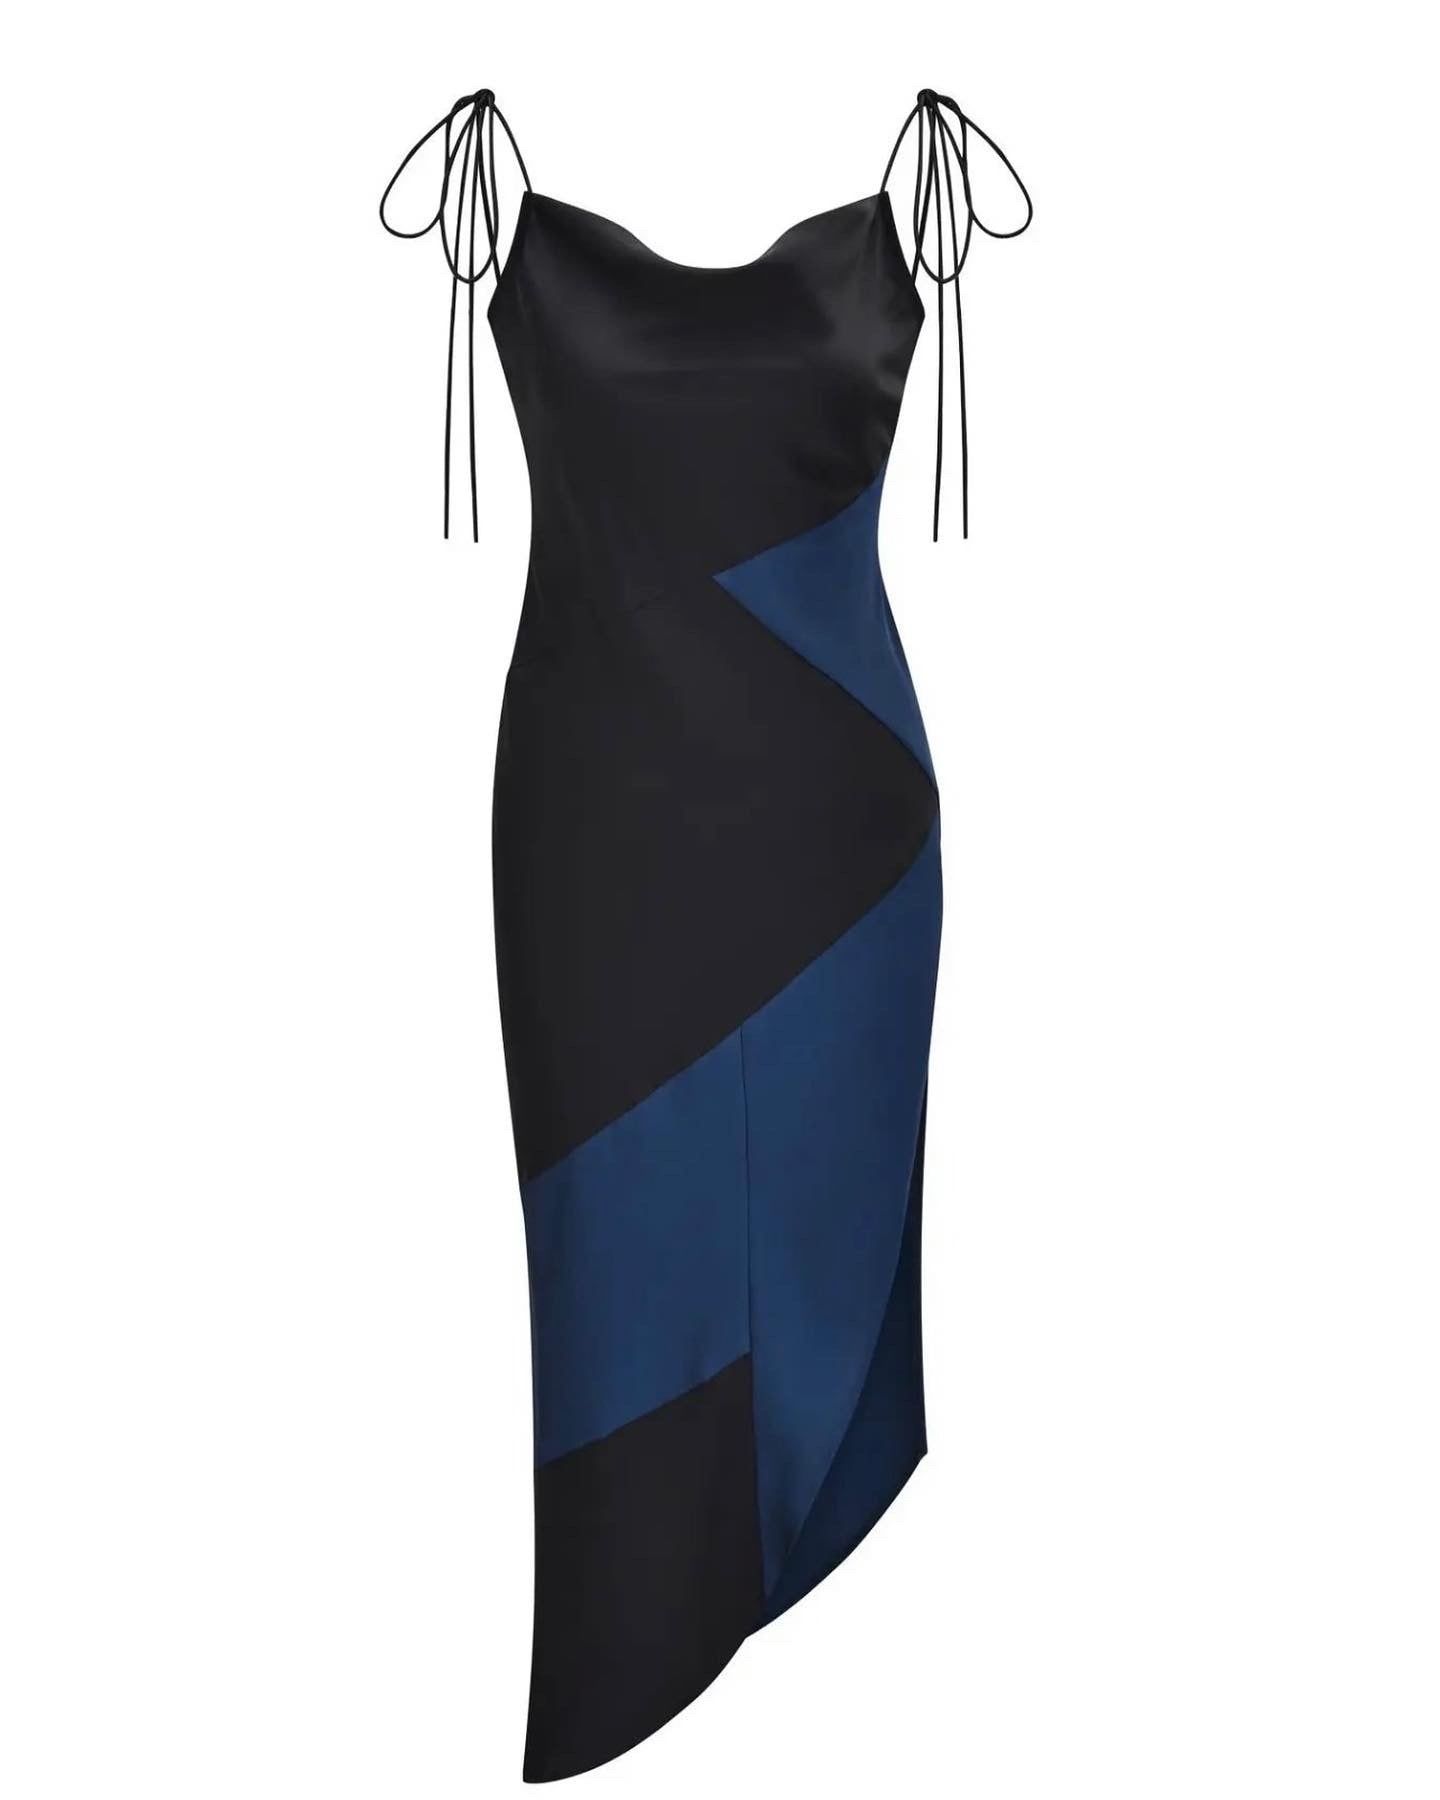 Grace Black Colors Block Slip Dress: Your Ultimate Fashion Statement for Semi-Formal Events - BTK COLLECTION